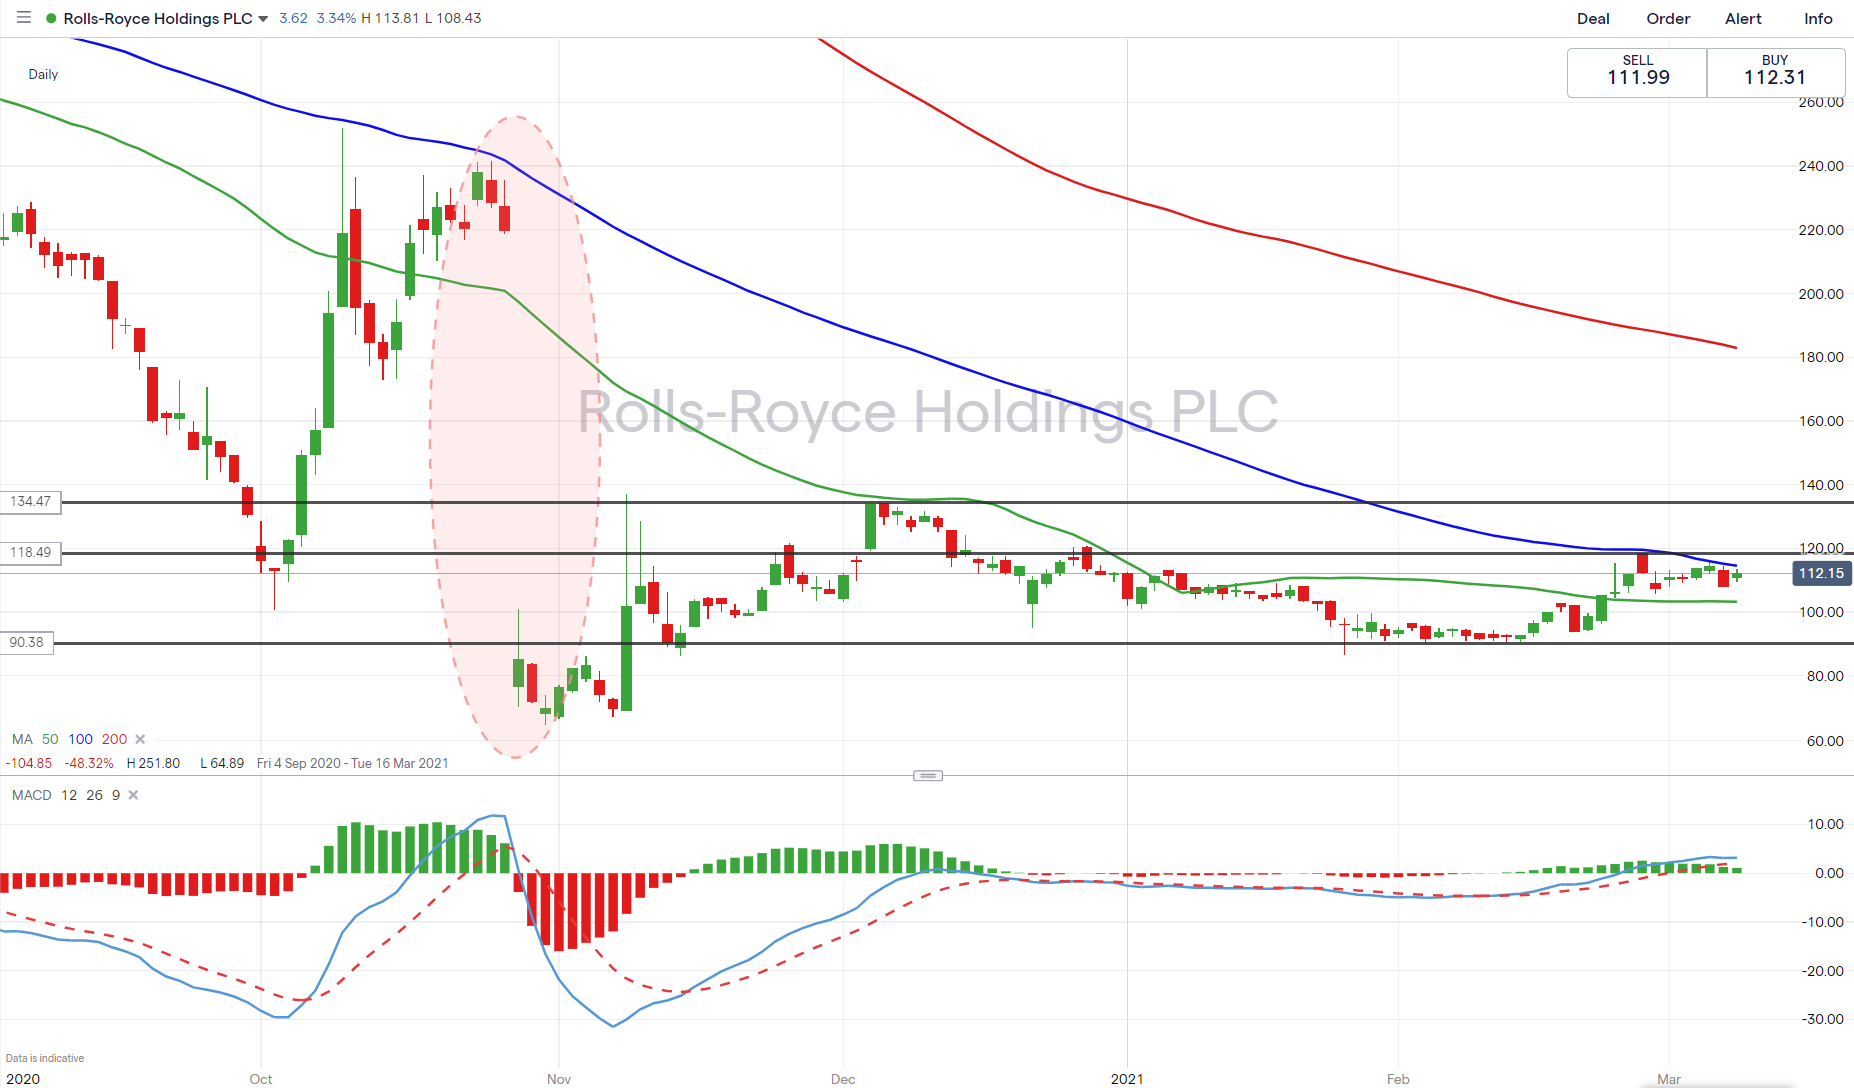 Share price royce rolls